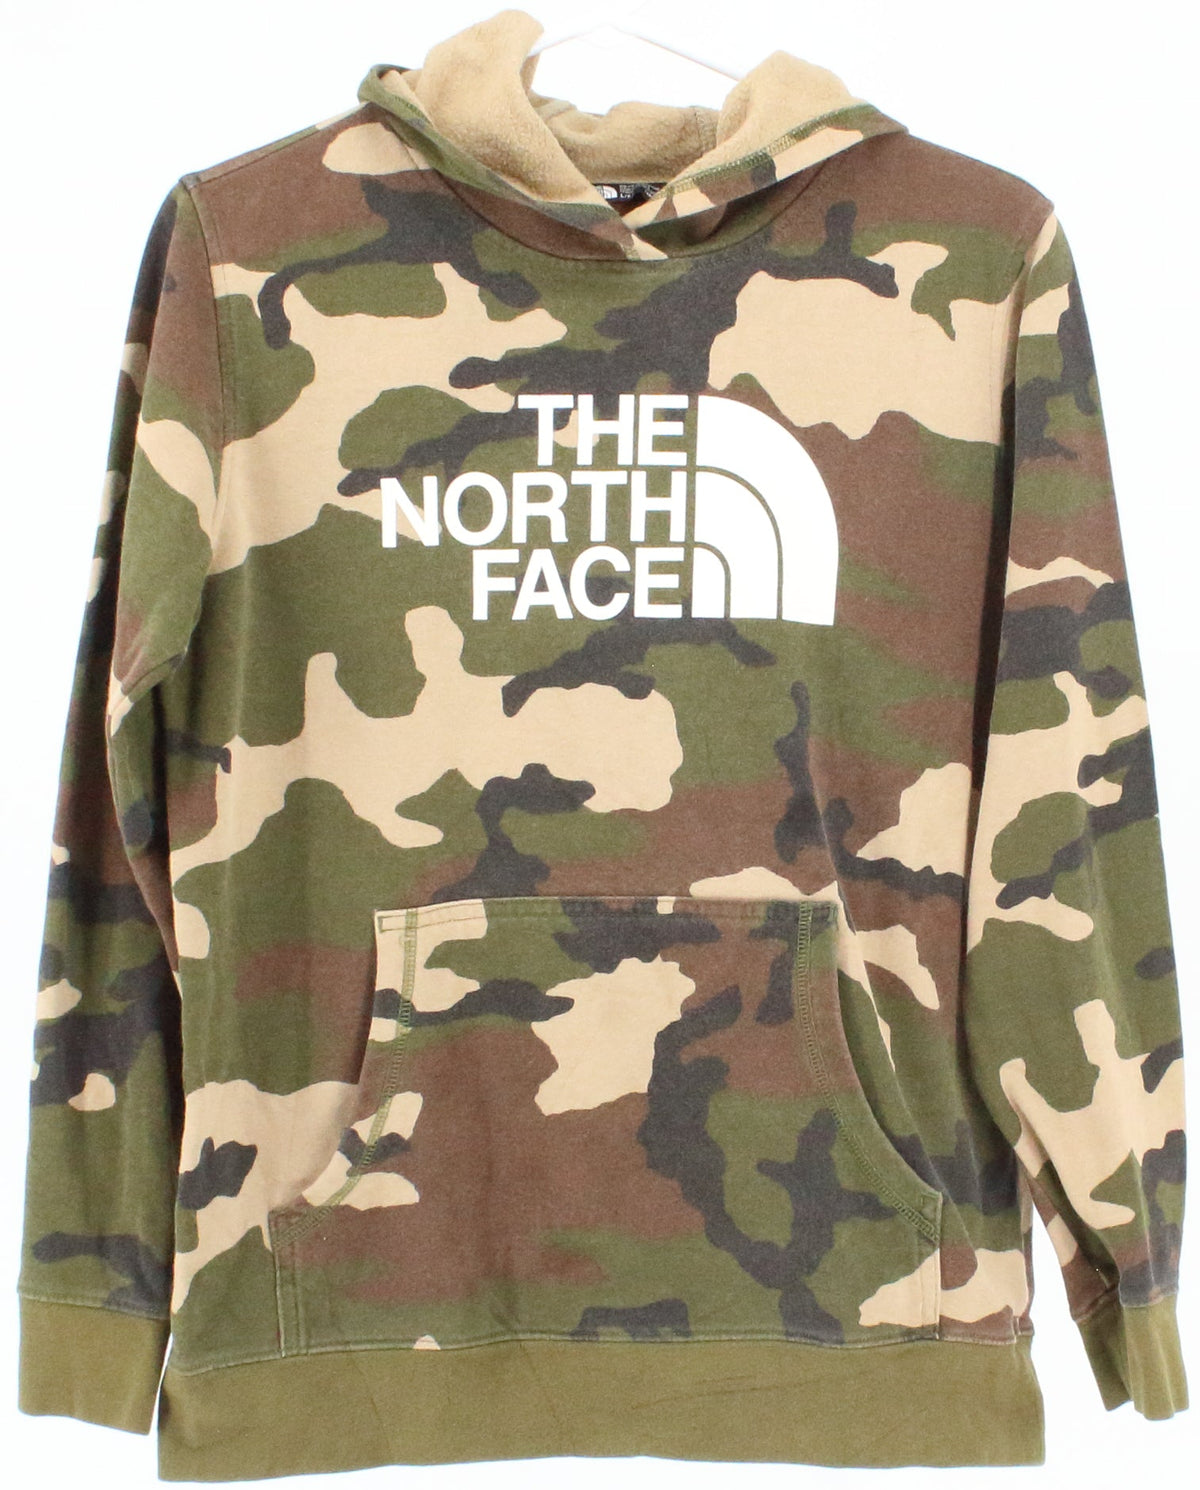 The North Face Camo Hooded Children's Sweatshirt